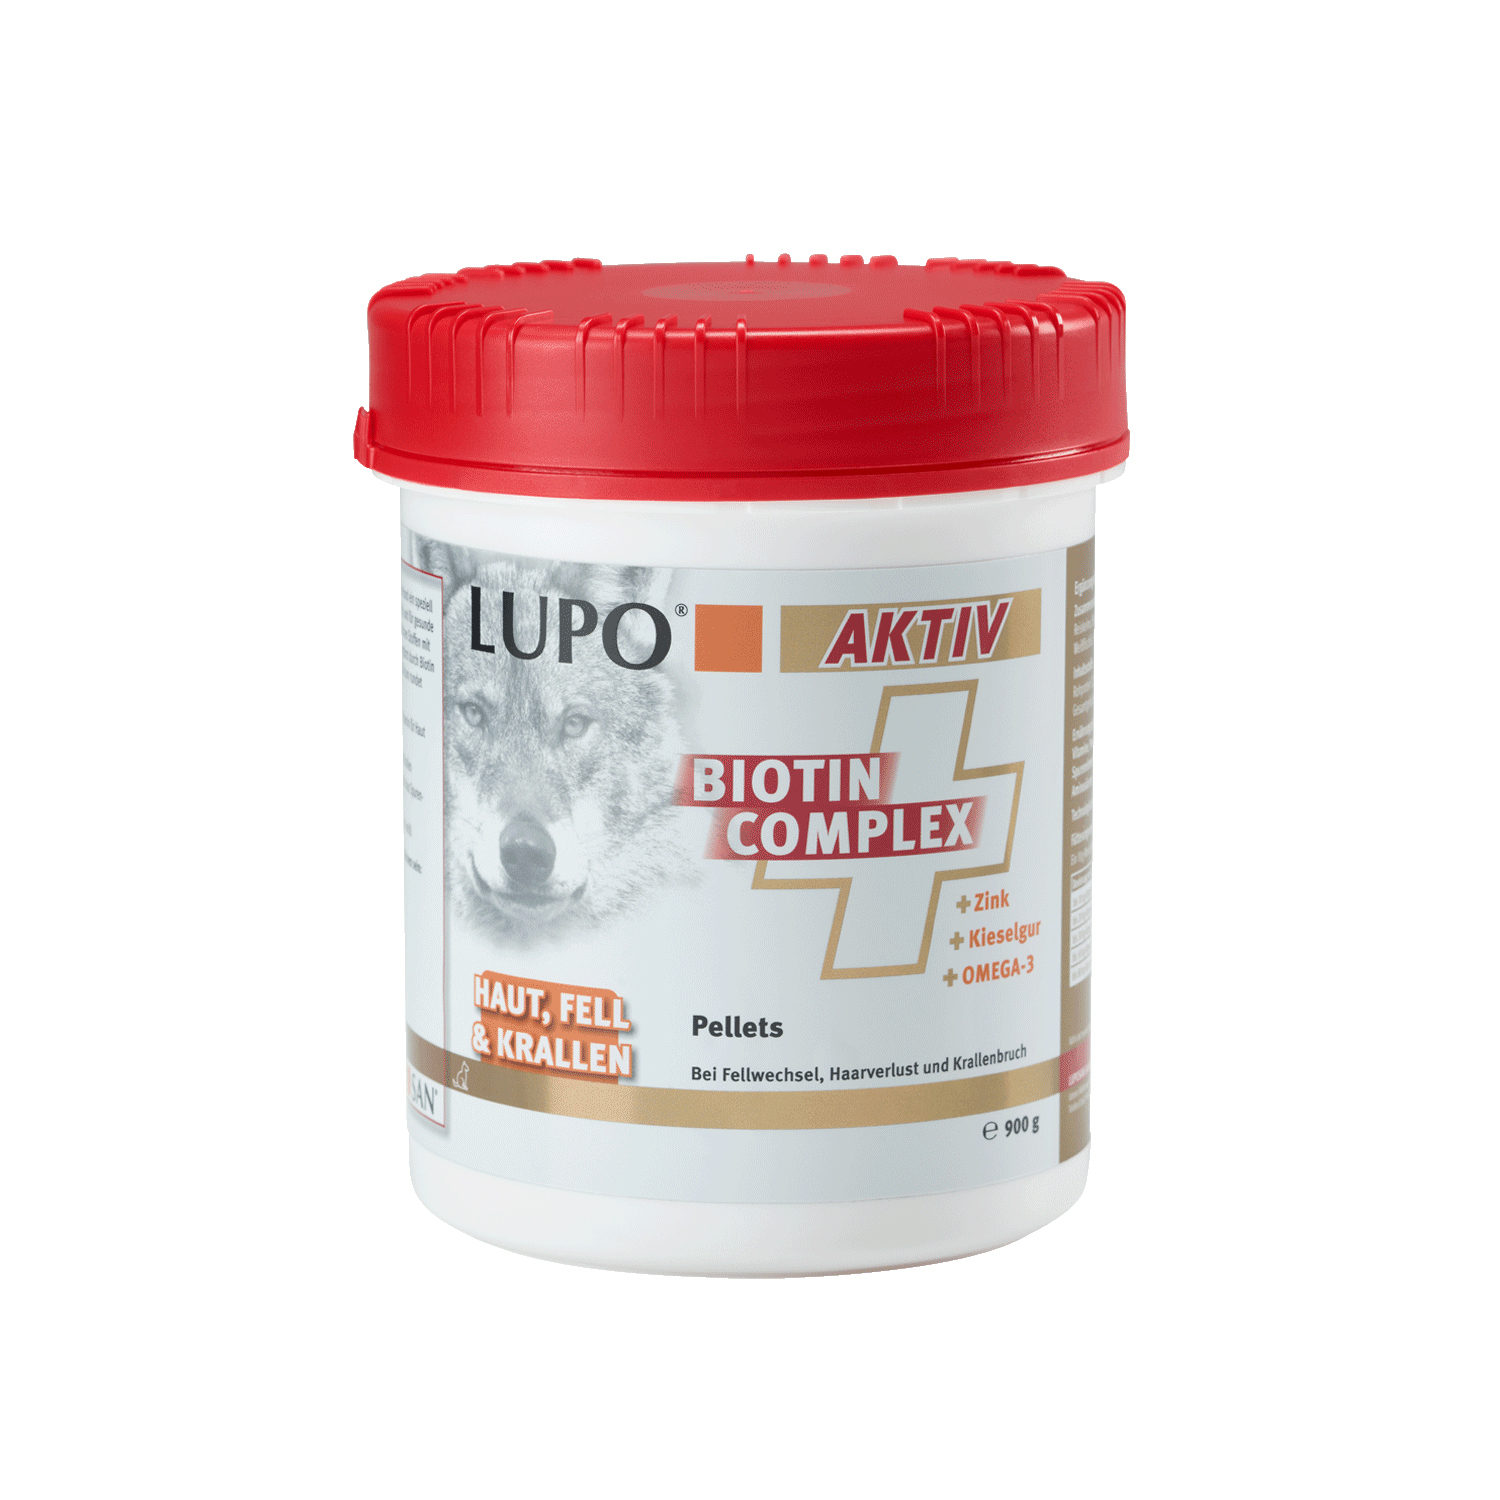 Lupo Aktiv Biotin Complex - 400 g von Luposan